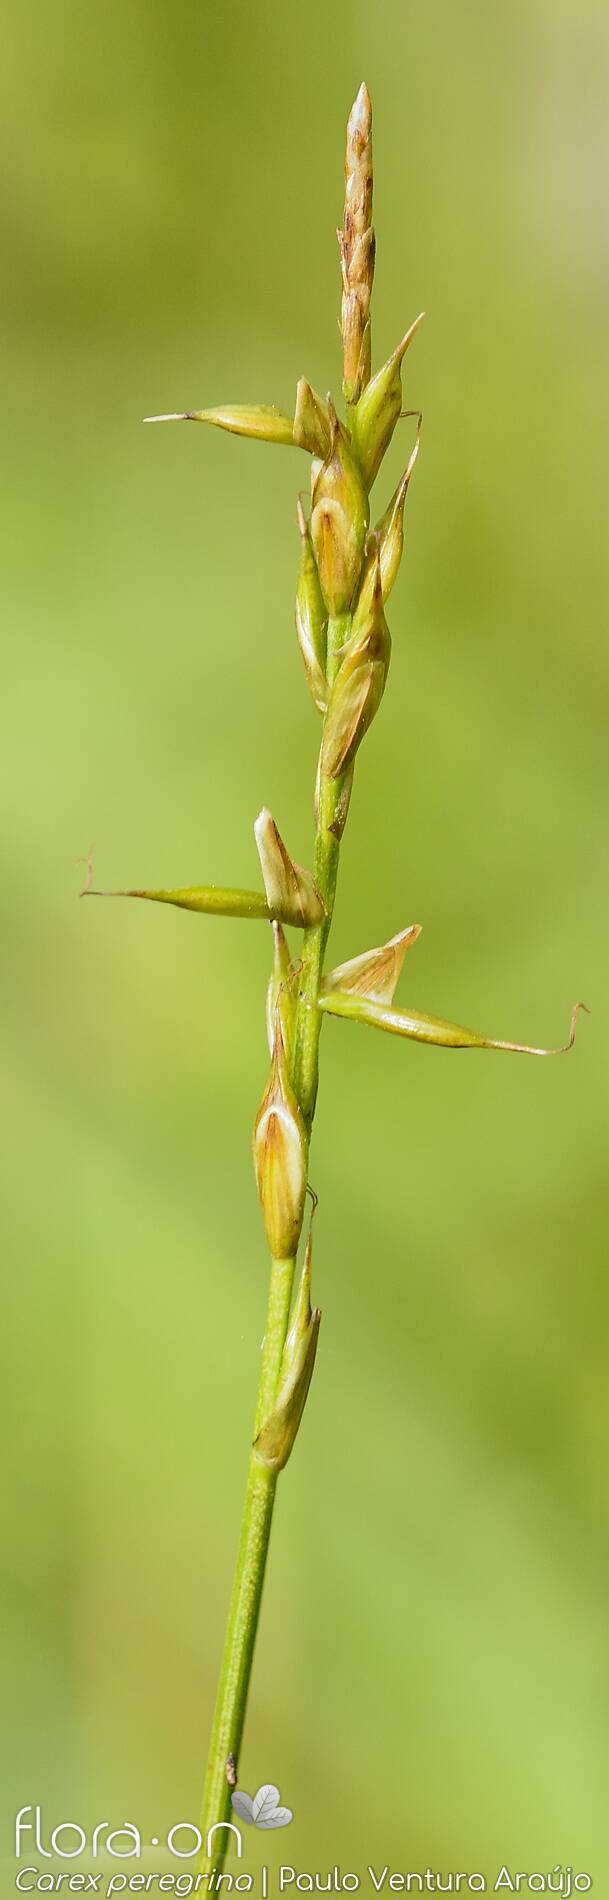 Carex peregrina - Flor (geral) | Paulo Ventura Araújo; CC BY-NC 4.0